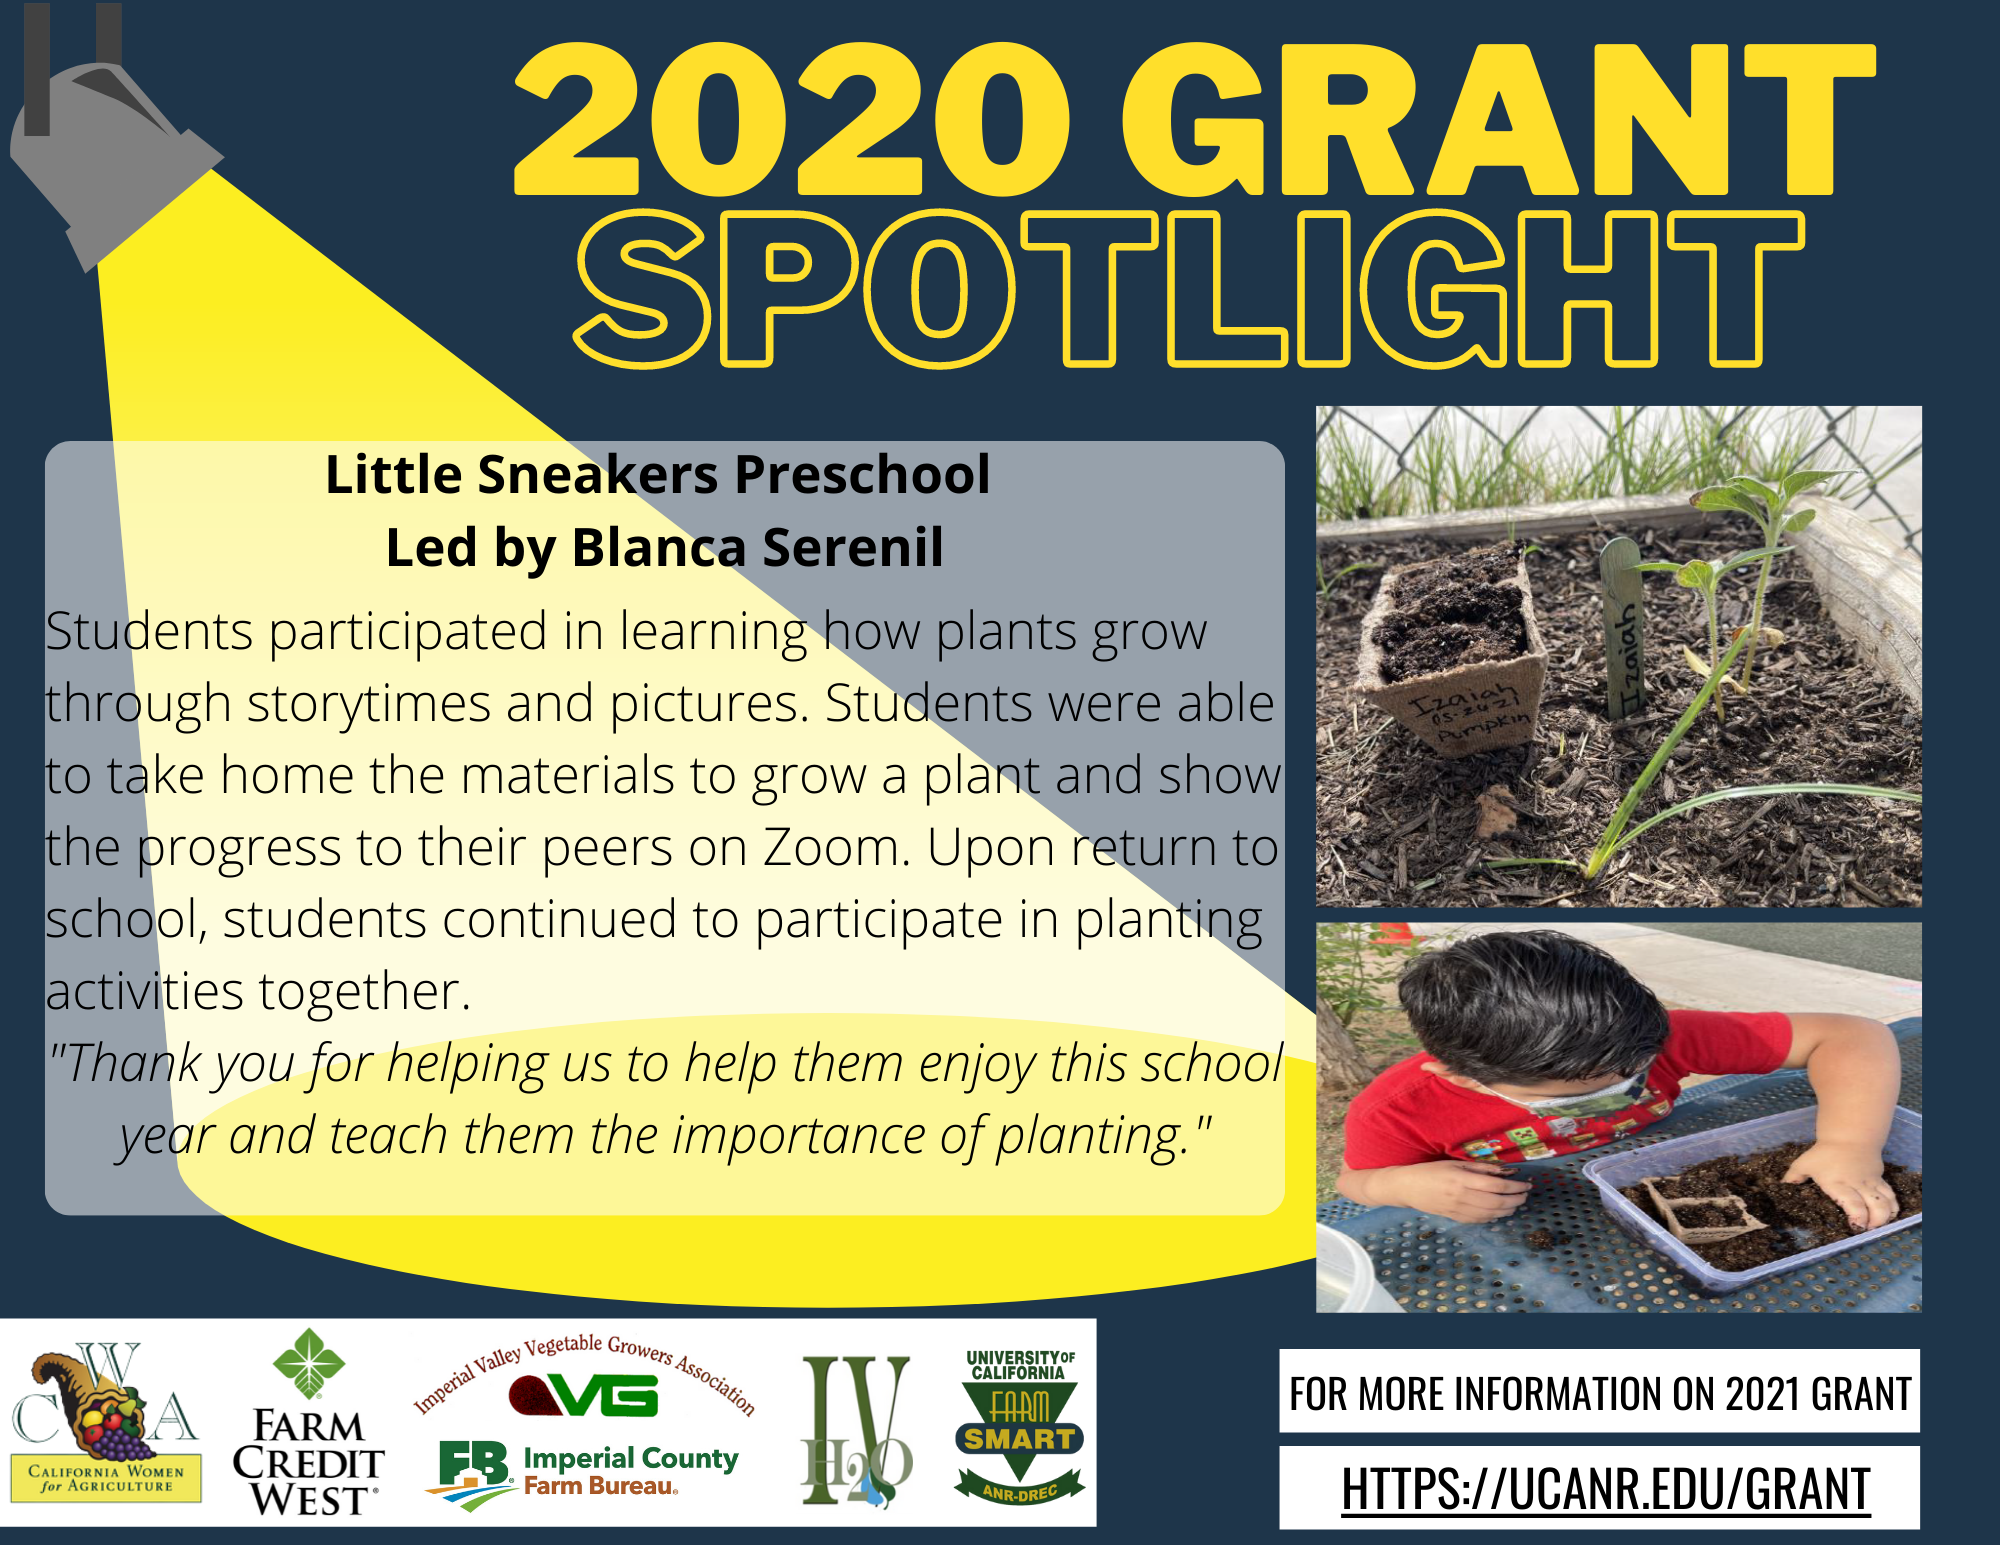 2020 grant spotlight-Little Sneakers Preschool Blanca Serenil